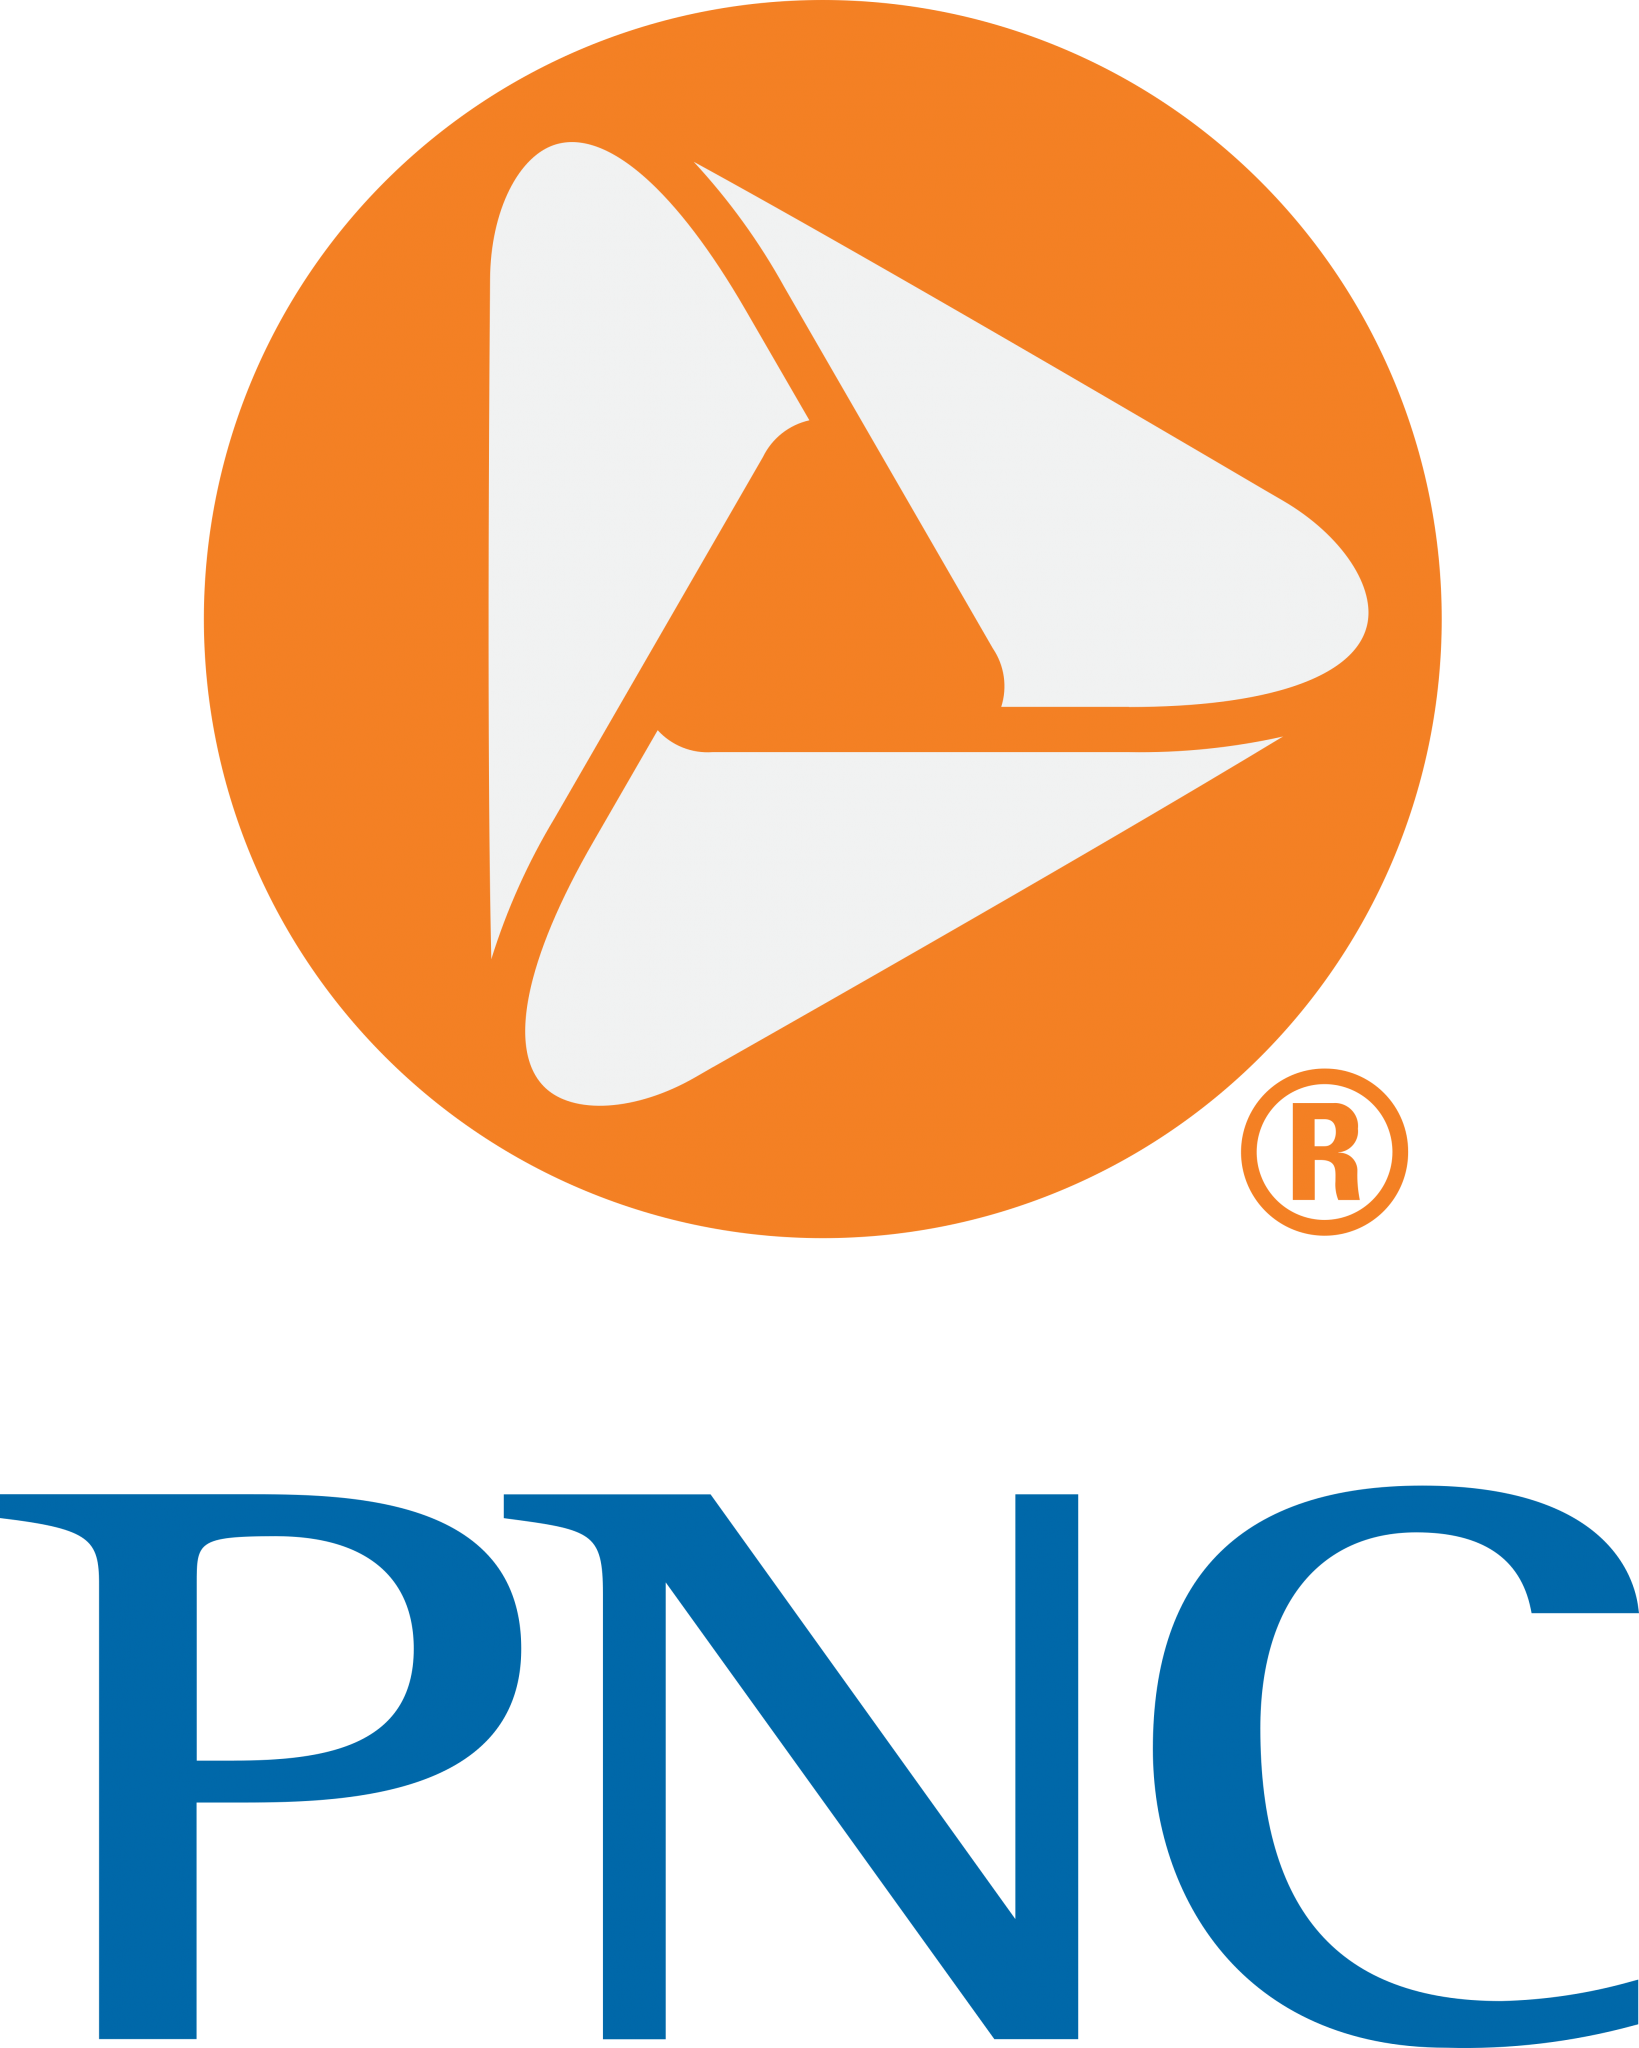 Pnc Bank Logo Png E Vetor Download De Logo